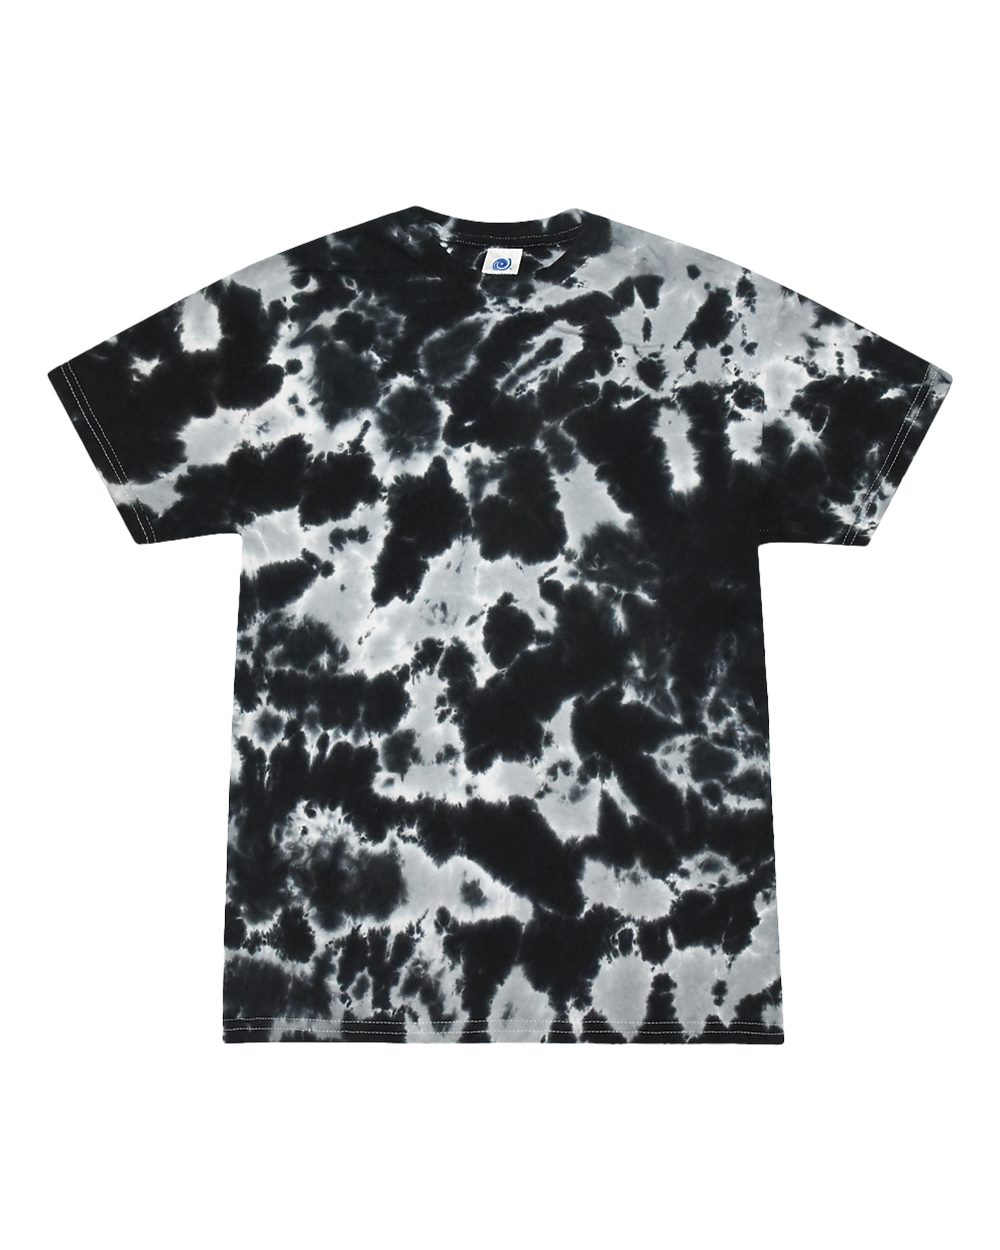 Swirl Black Tie Dye T-Shirts Adult & Kids Sizes Cotton Colortone